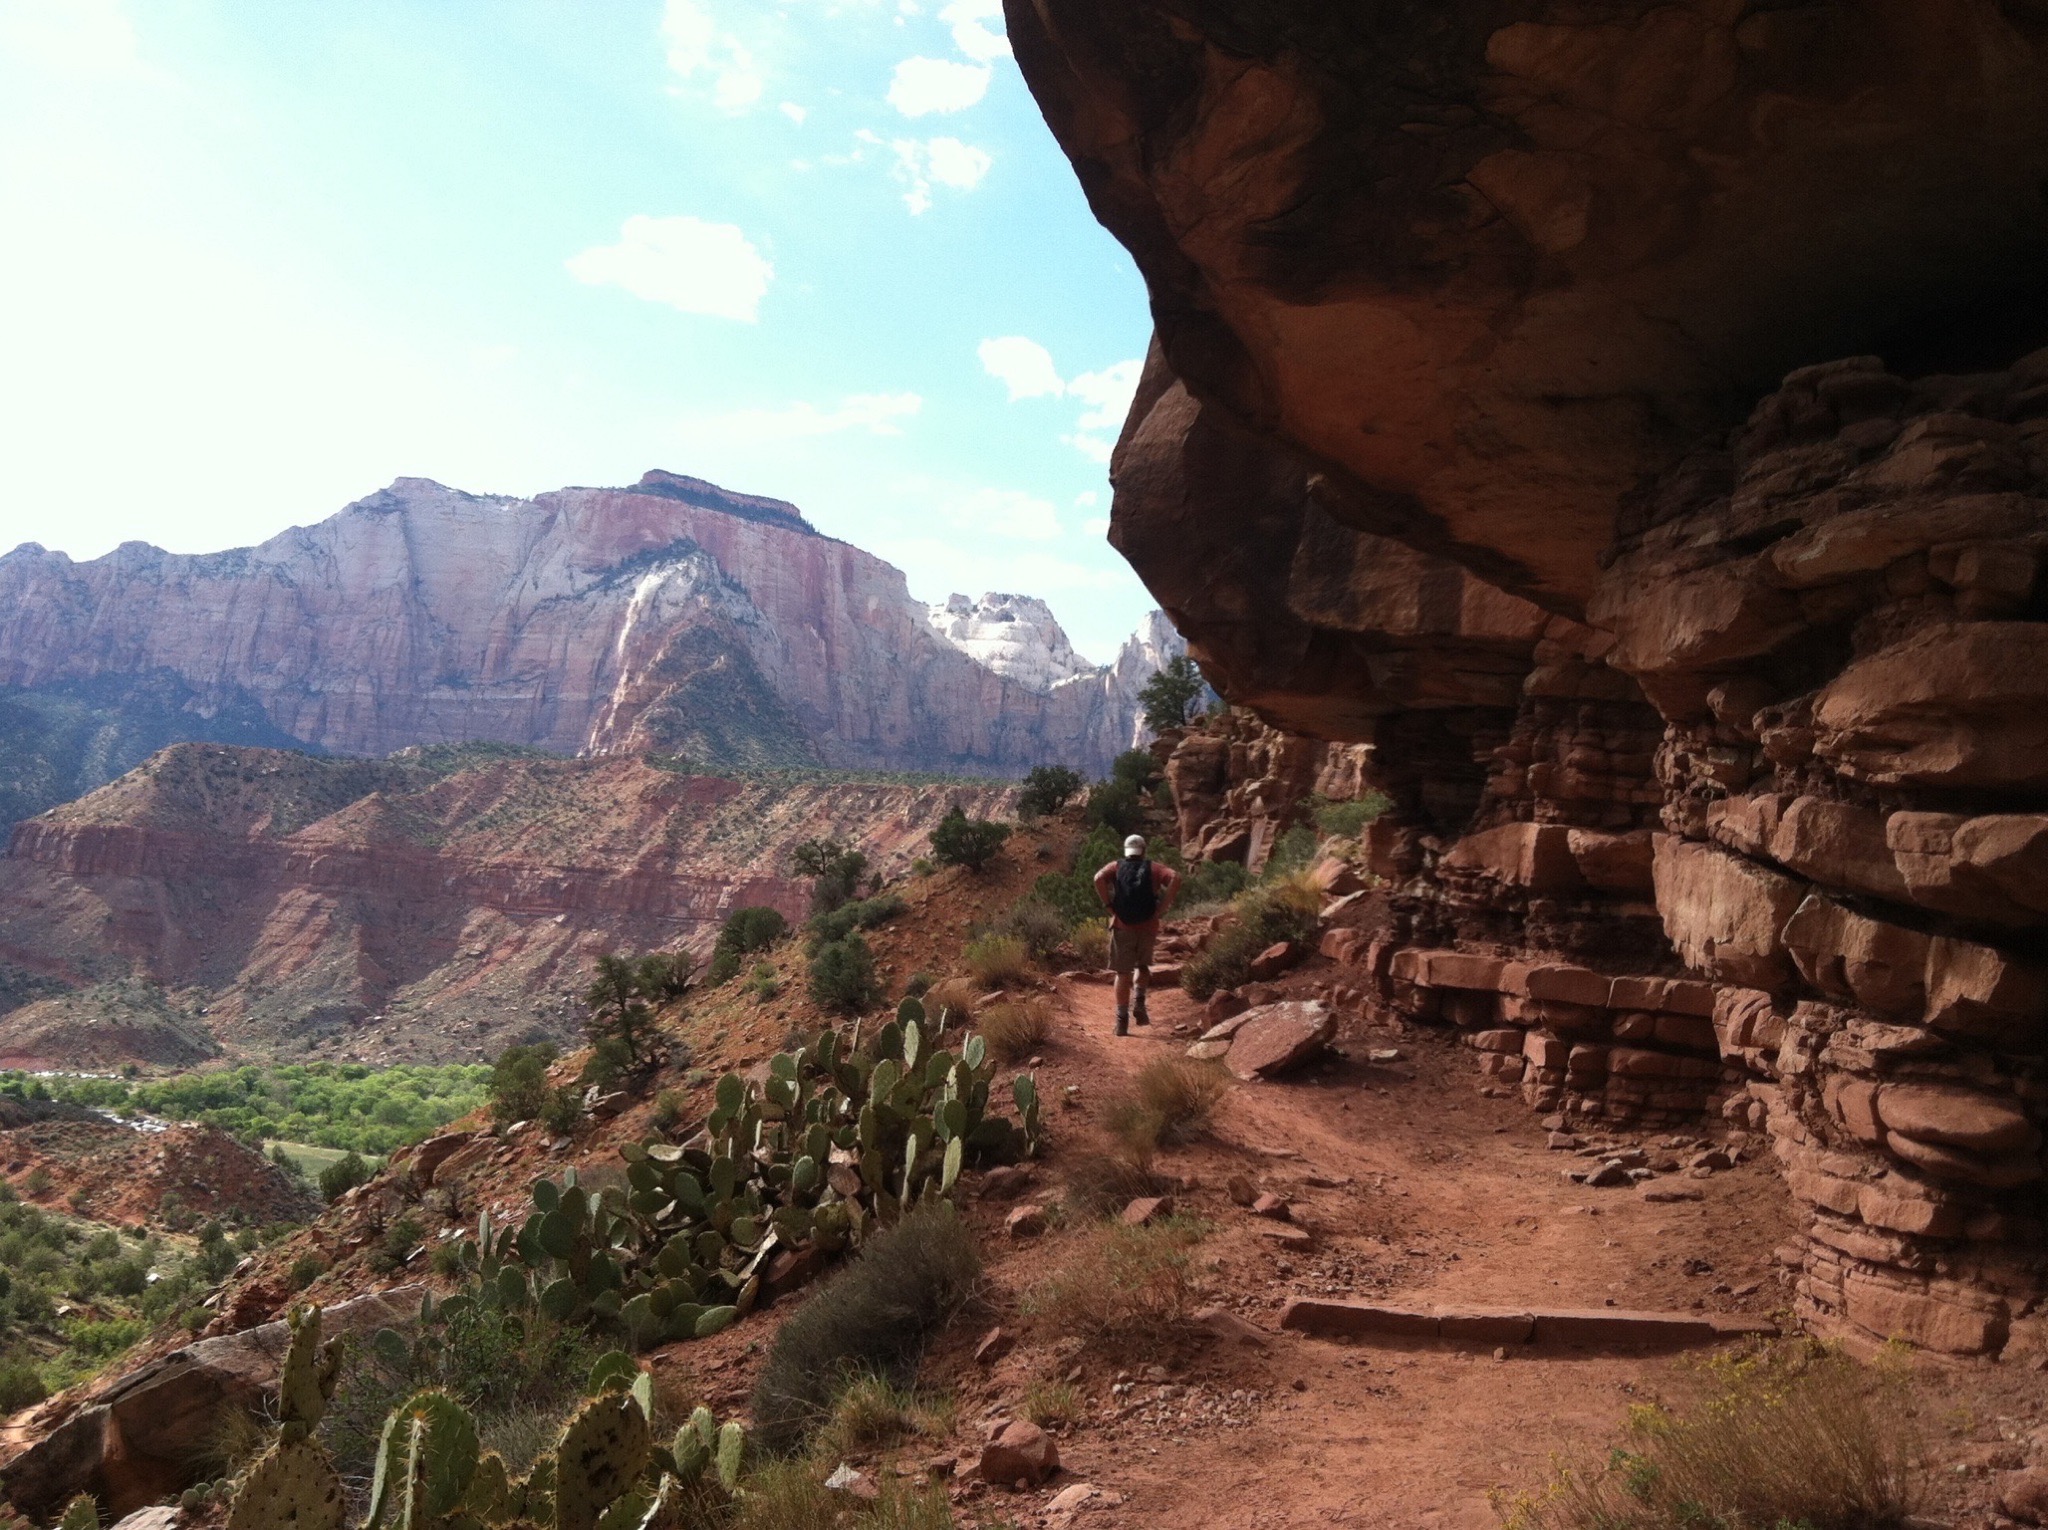 Trail alongside the canyon